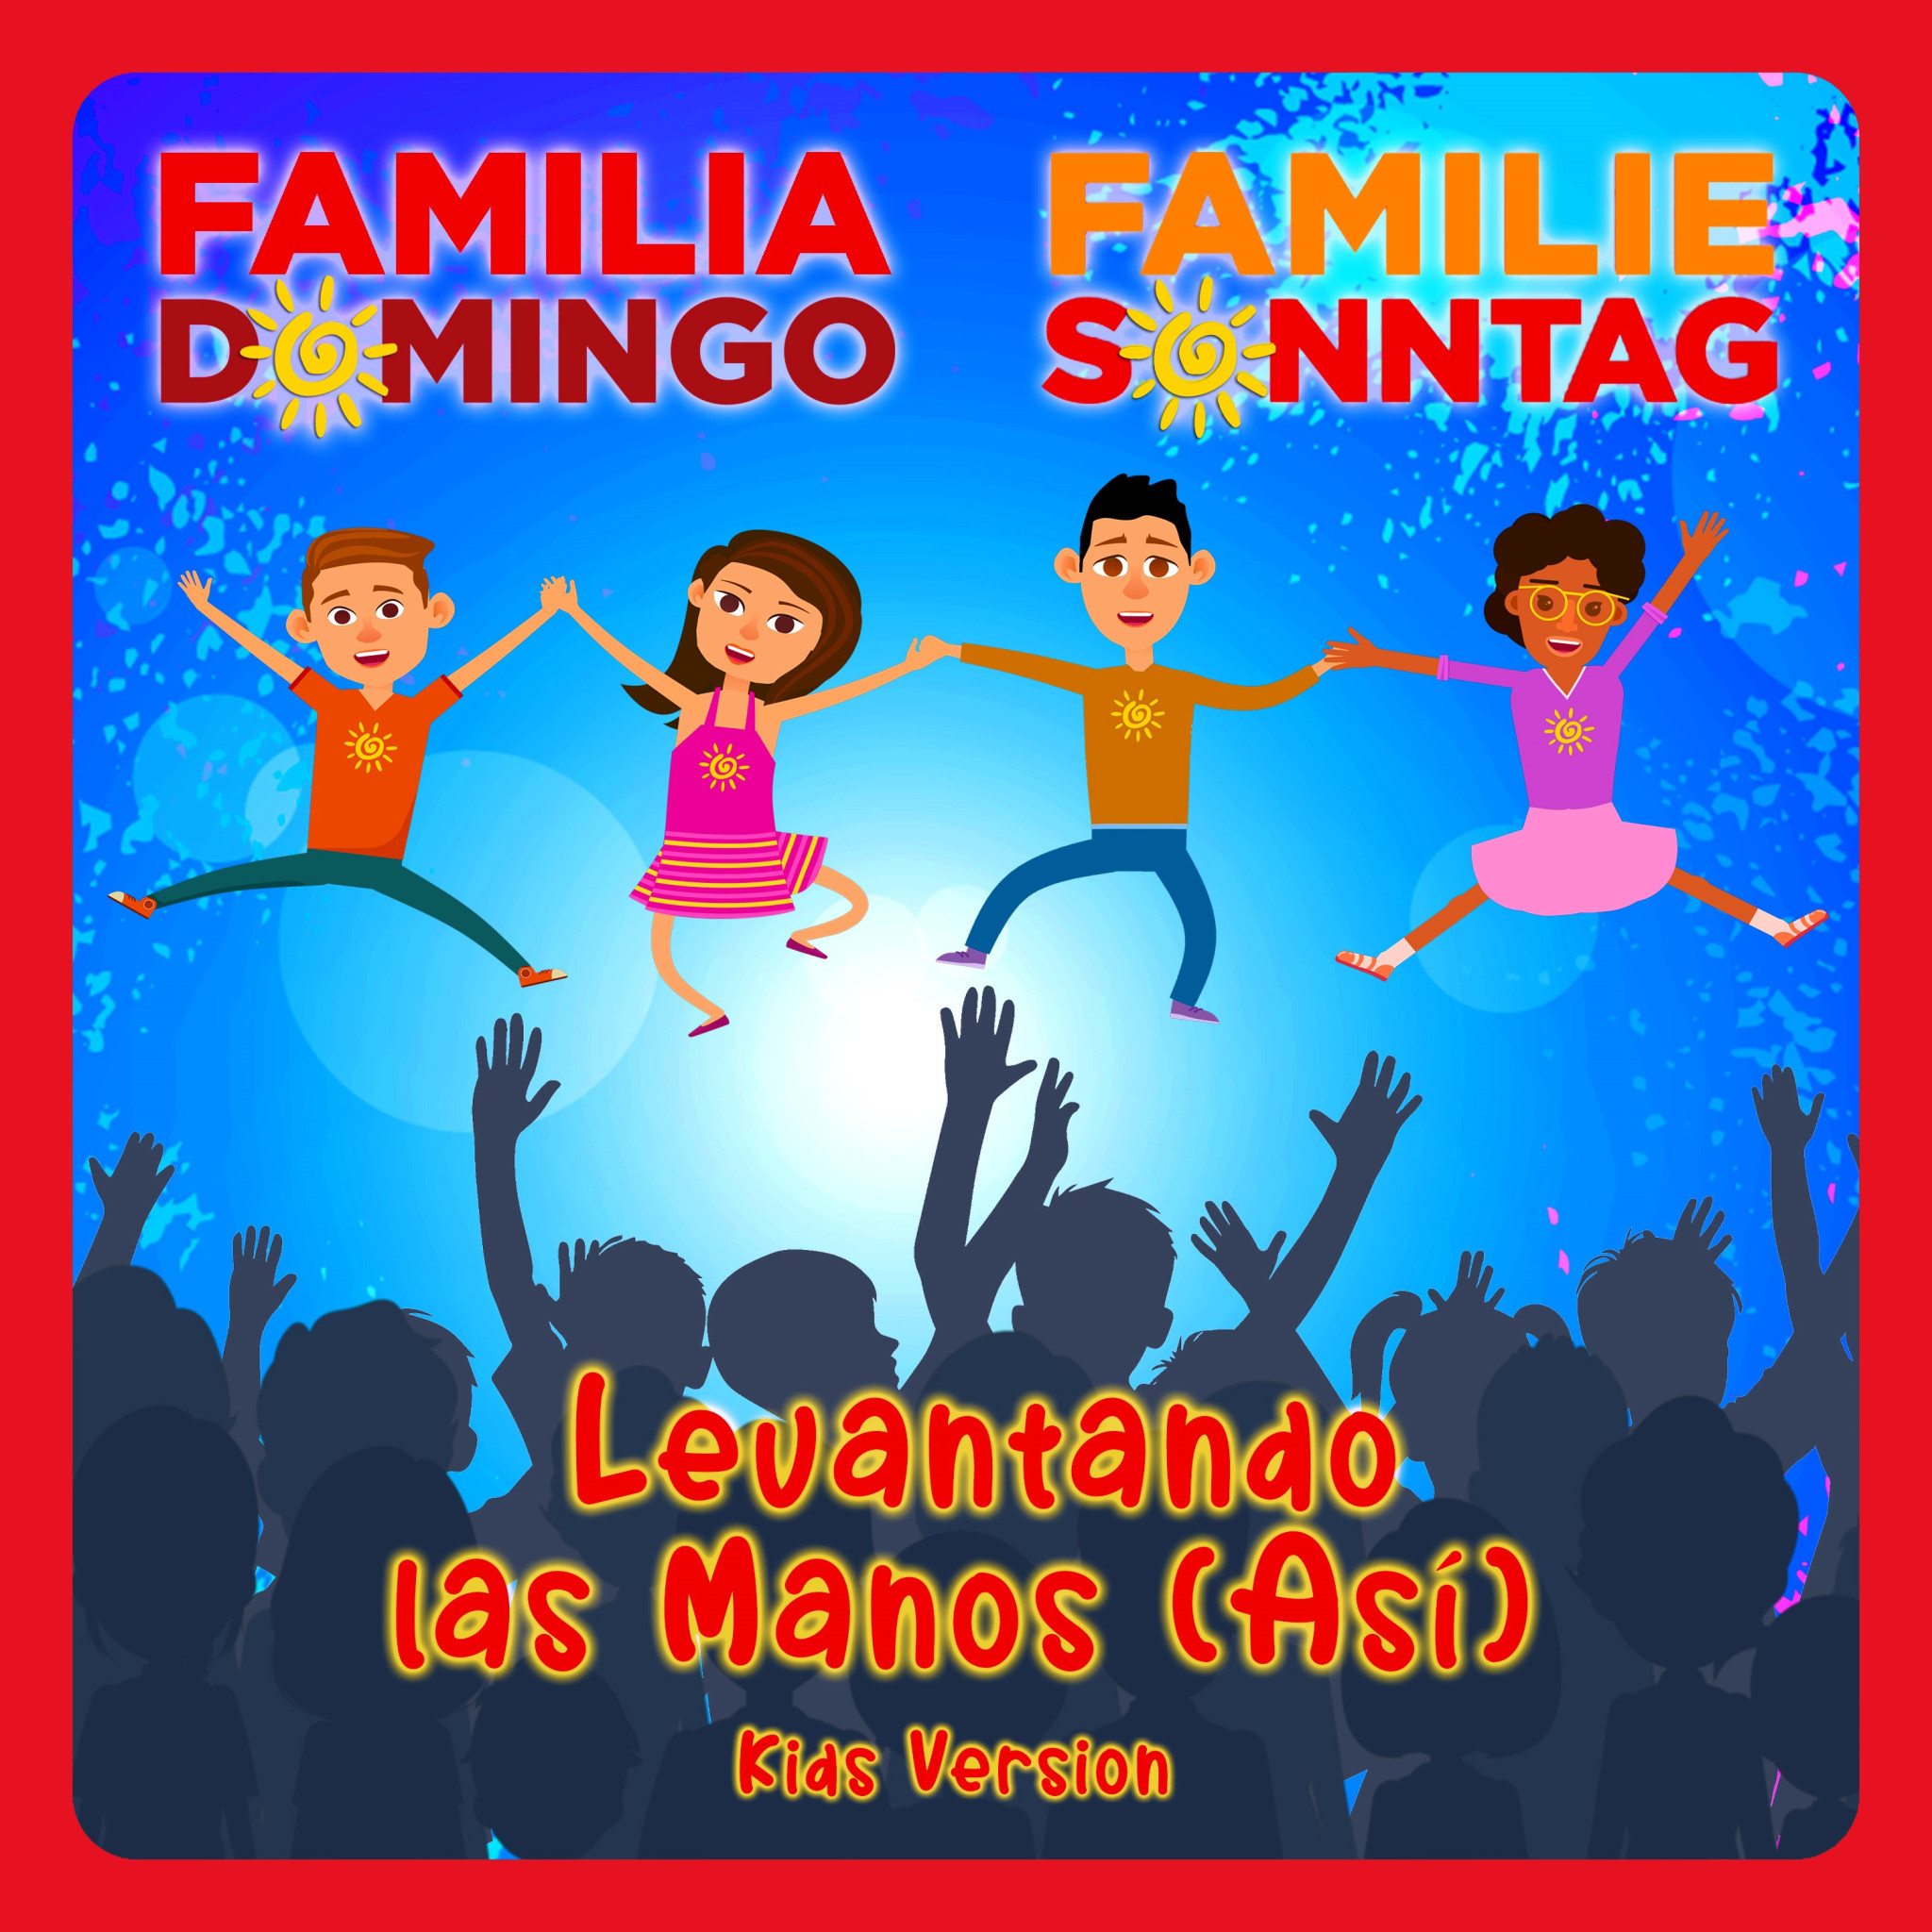 FAMILIA DOMINGO_FAMILIE SONNTAG_Levantando las Manos_Kids Version Cover (1).jpg